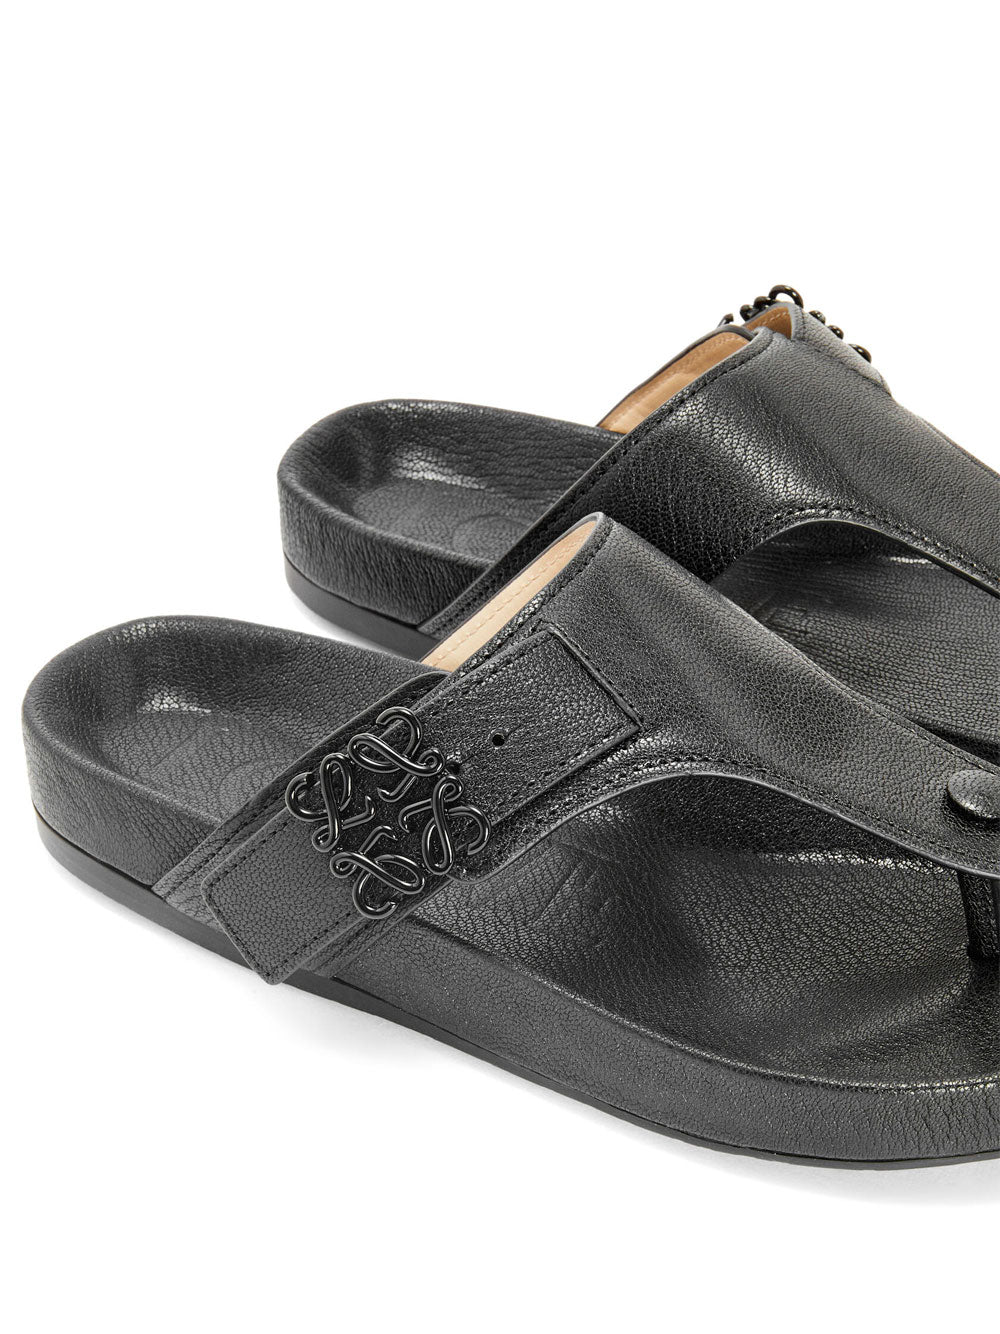 Comfort 35 sandals